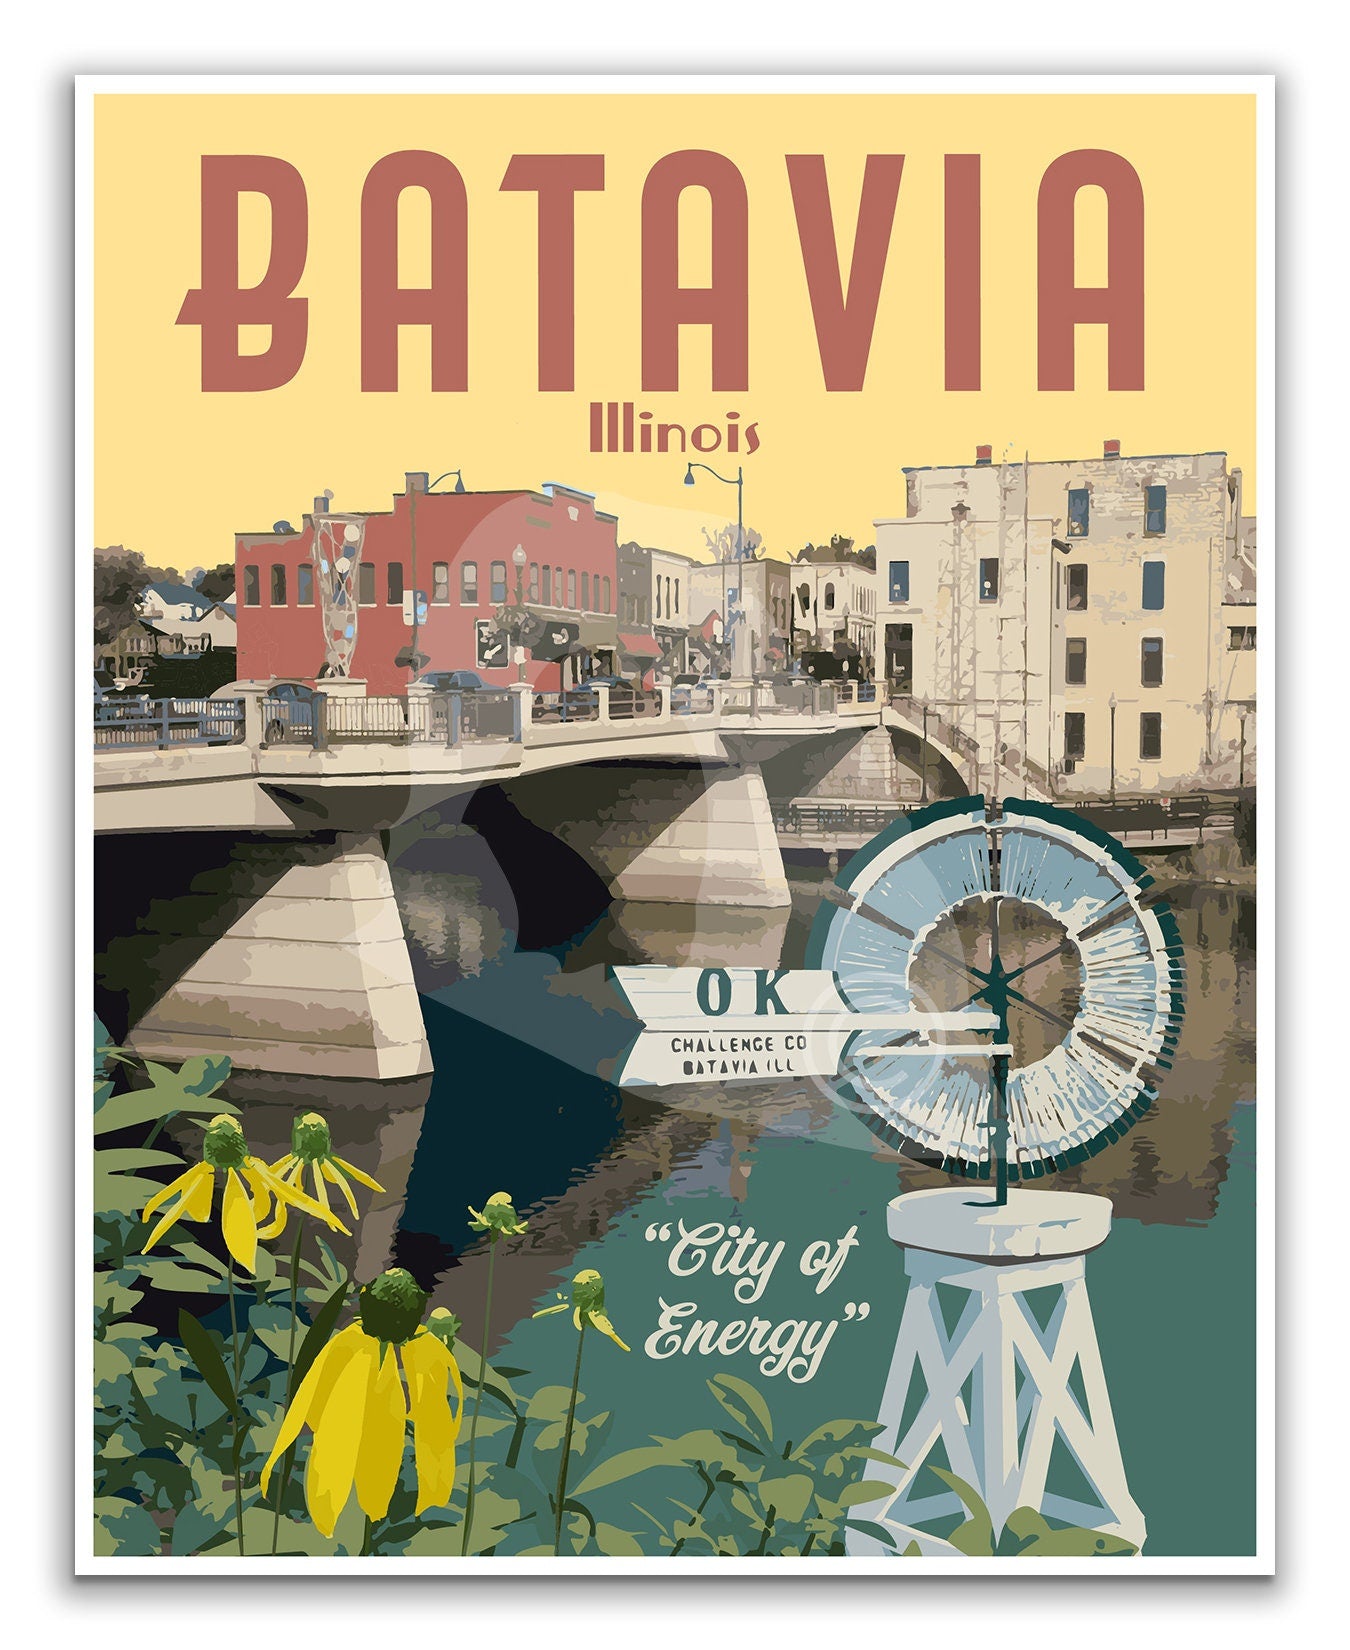 Chicagoland Tri-Cities Vintage Style Travel Prints, Saint Charles Illinois Poster, Batavia Illinois Poster, Geneva Illinois Poster, Three Print Value Set